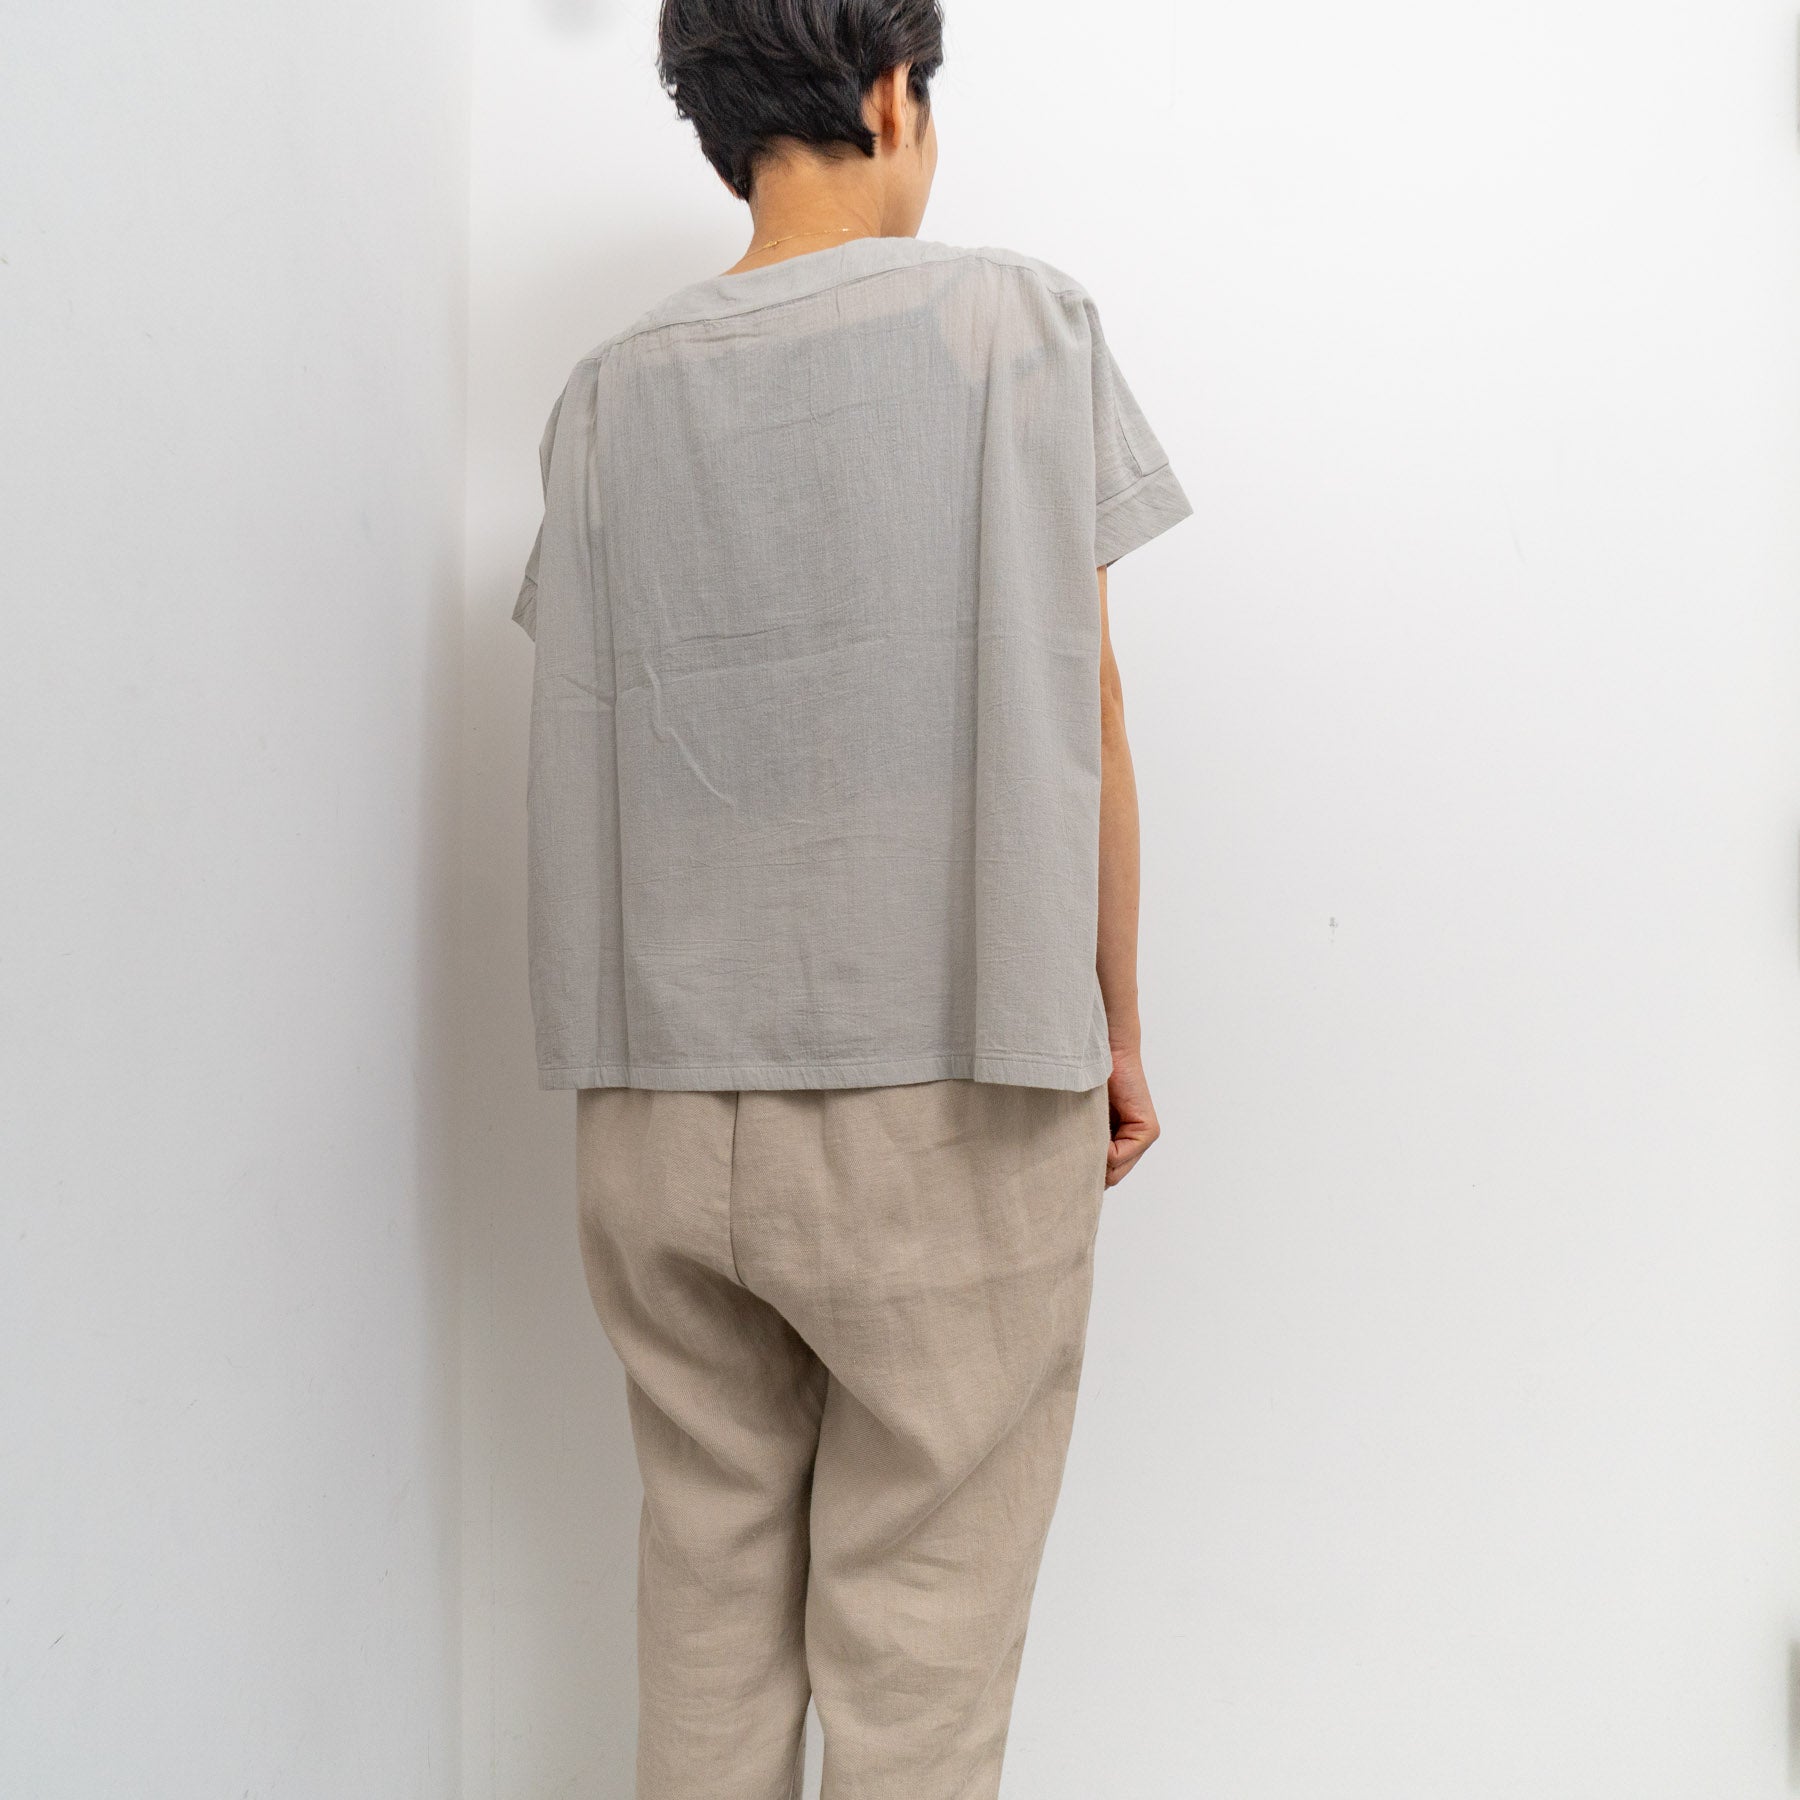 evam eva/ cotton narrow tuck pants – haus-netstore